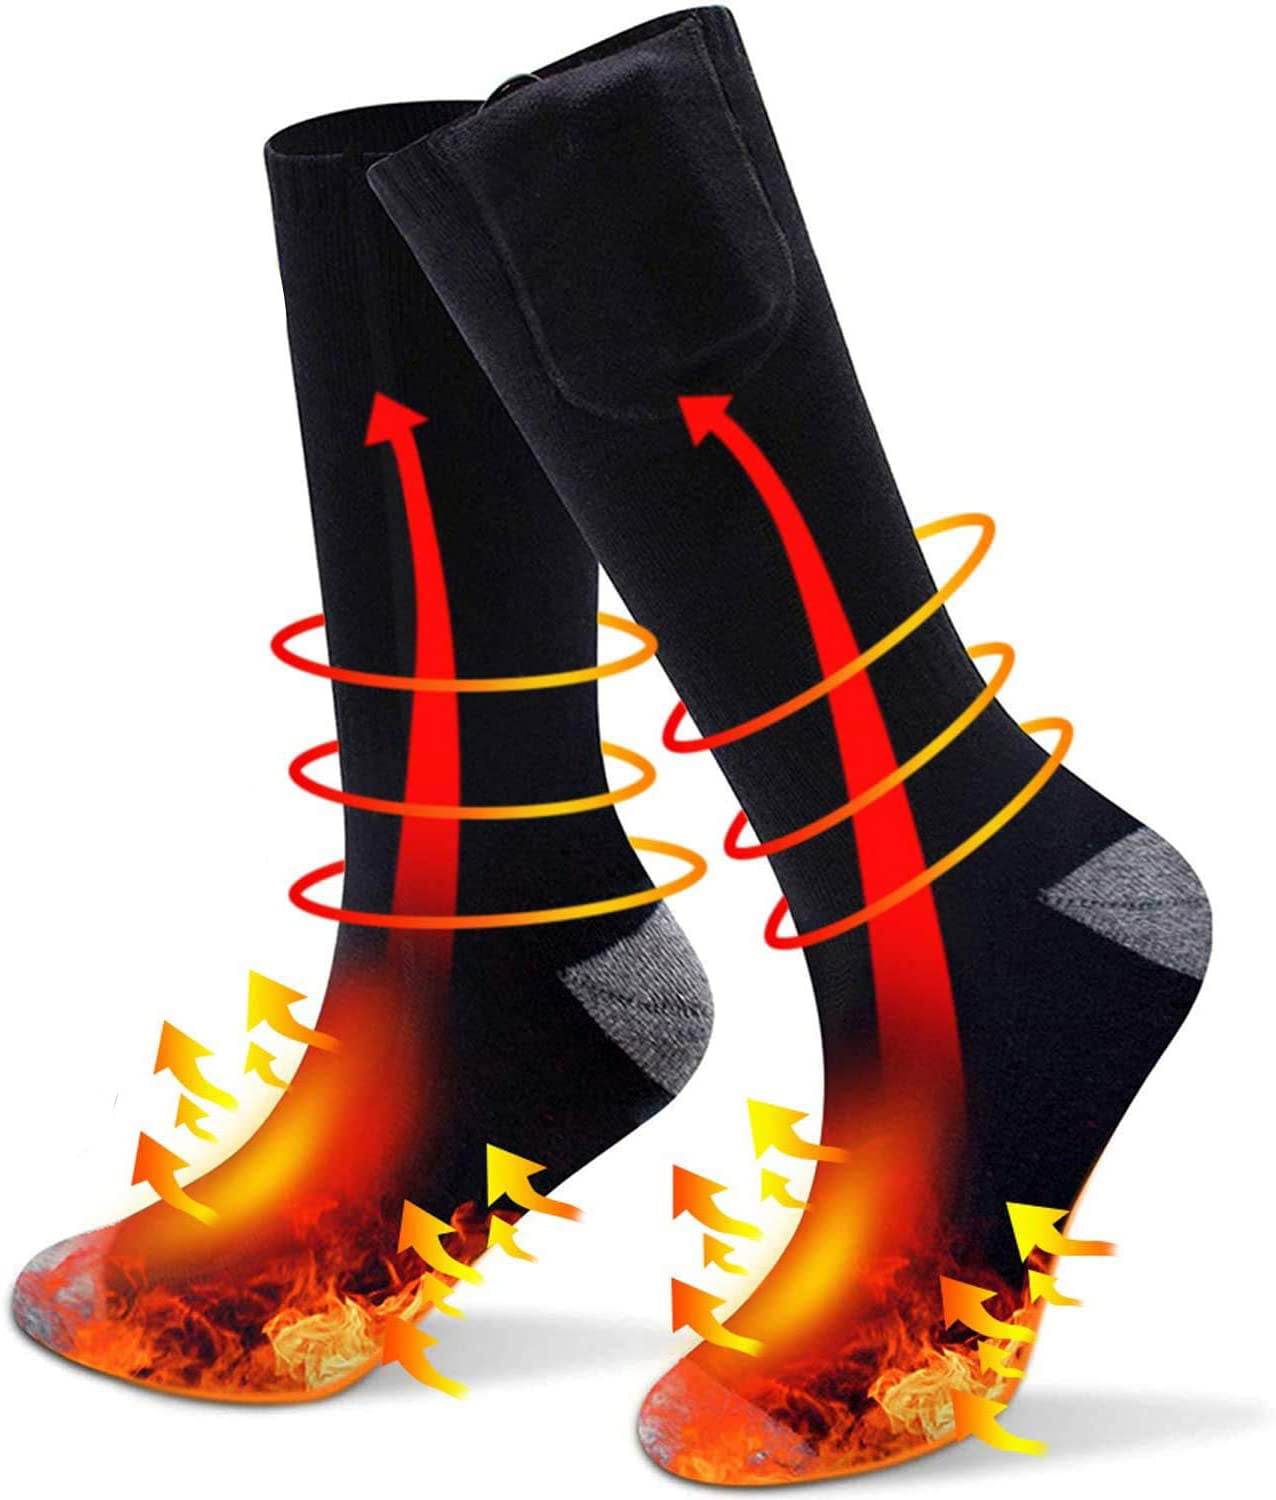 New Upgrade Electric Heated Socks Feet Warmer USB Rechargable Battery Warm Sock 